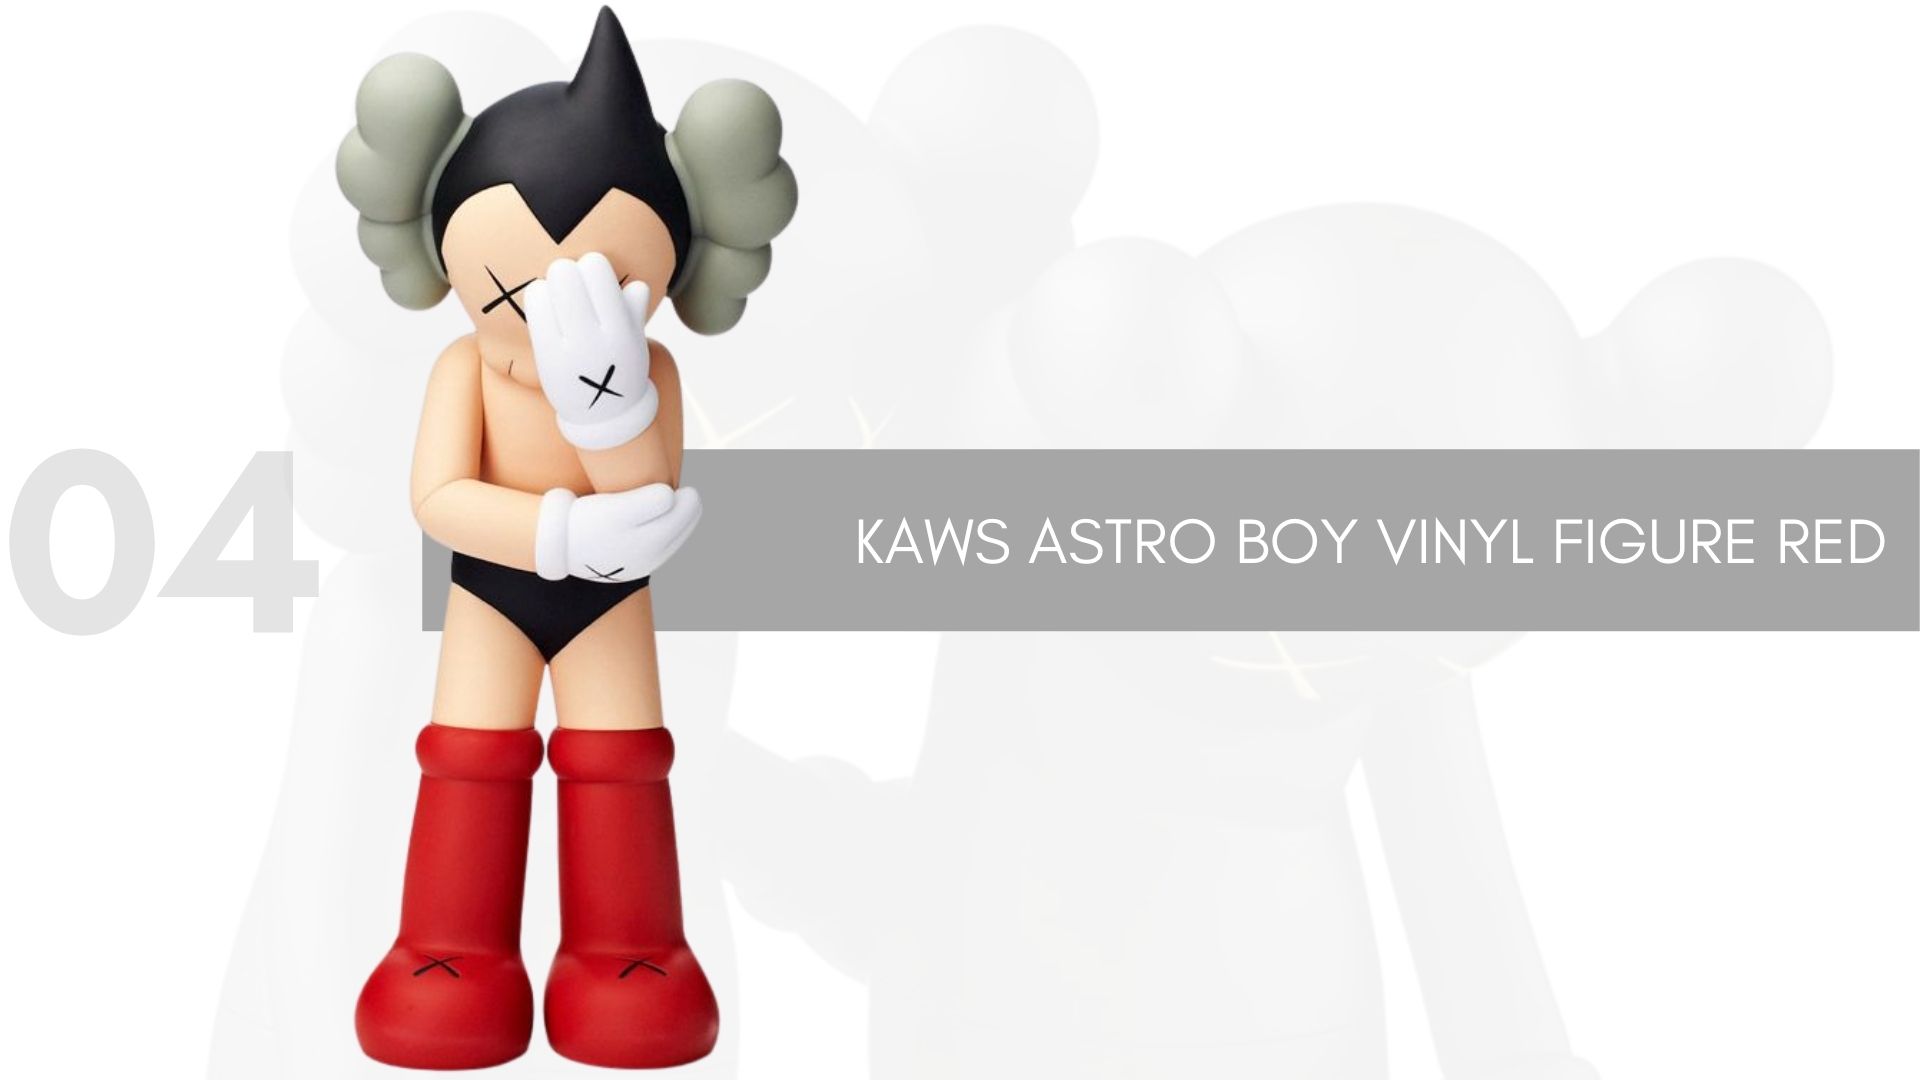 KAWS Astro Boy Vinyl Figure Red